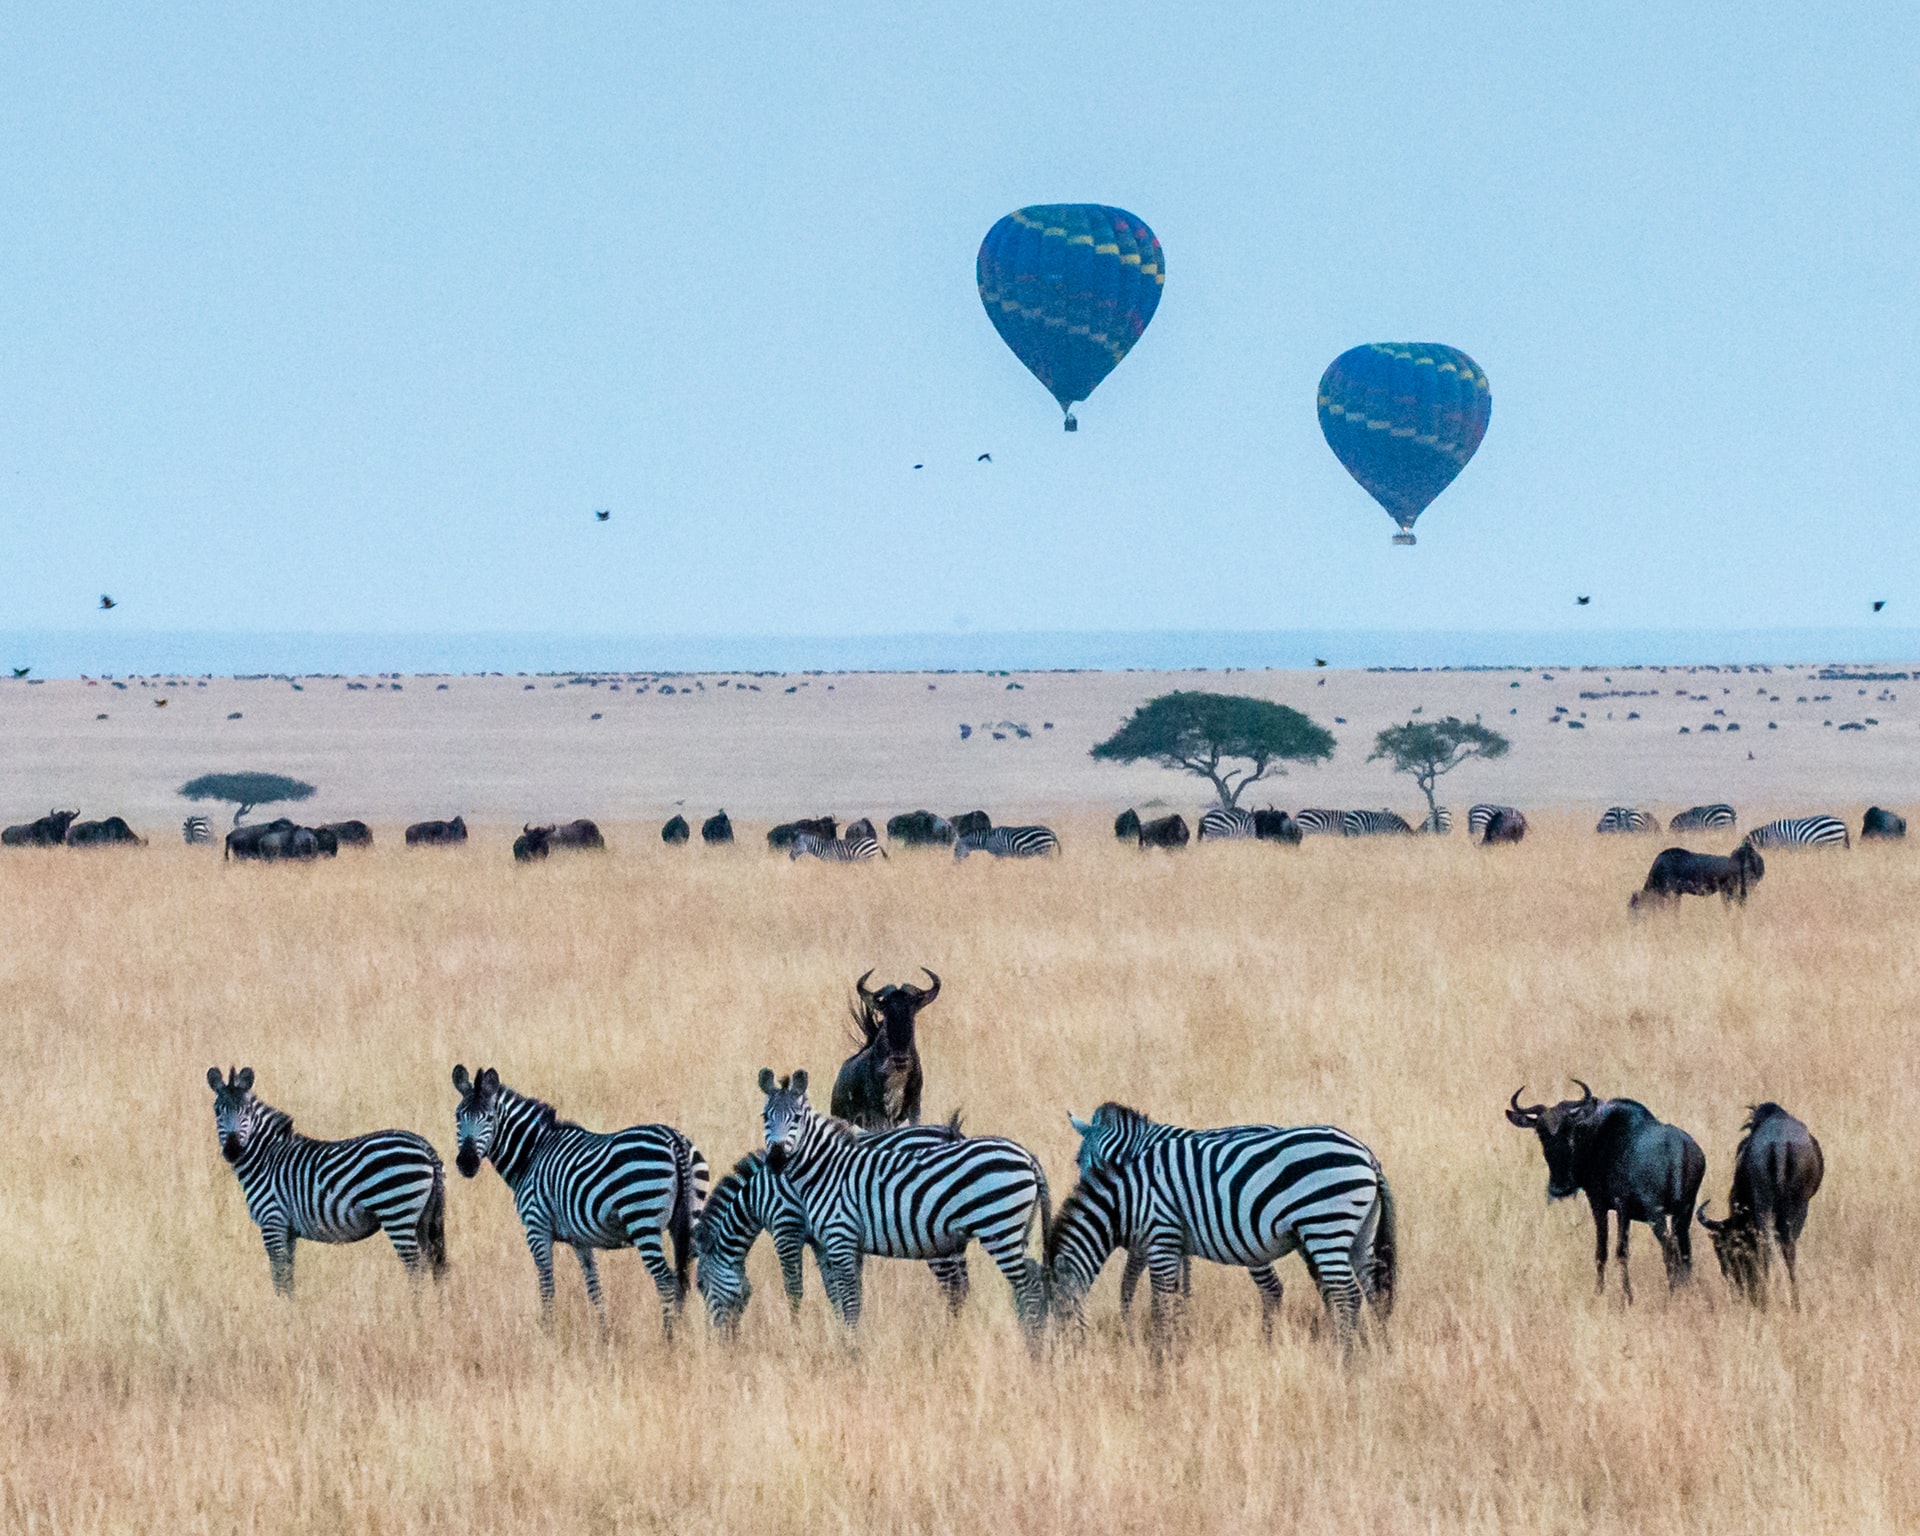 Mongolfiere in ascensione in lontananza sopra una savana con zebre e gnu